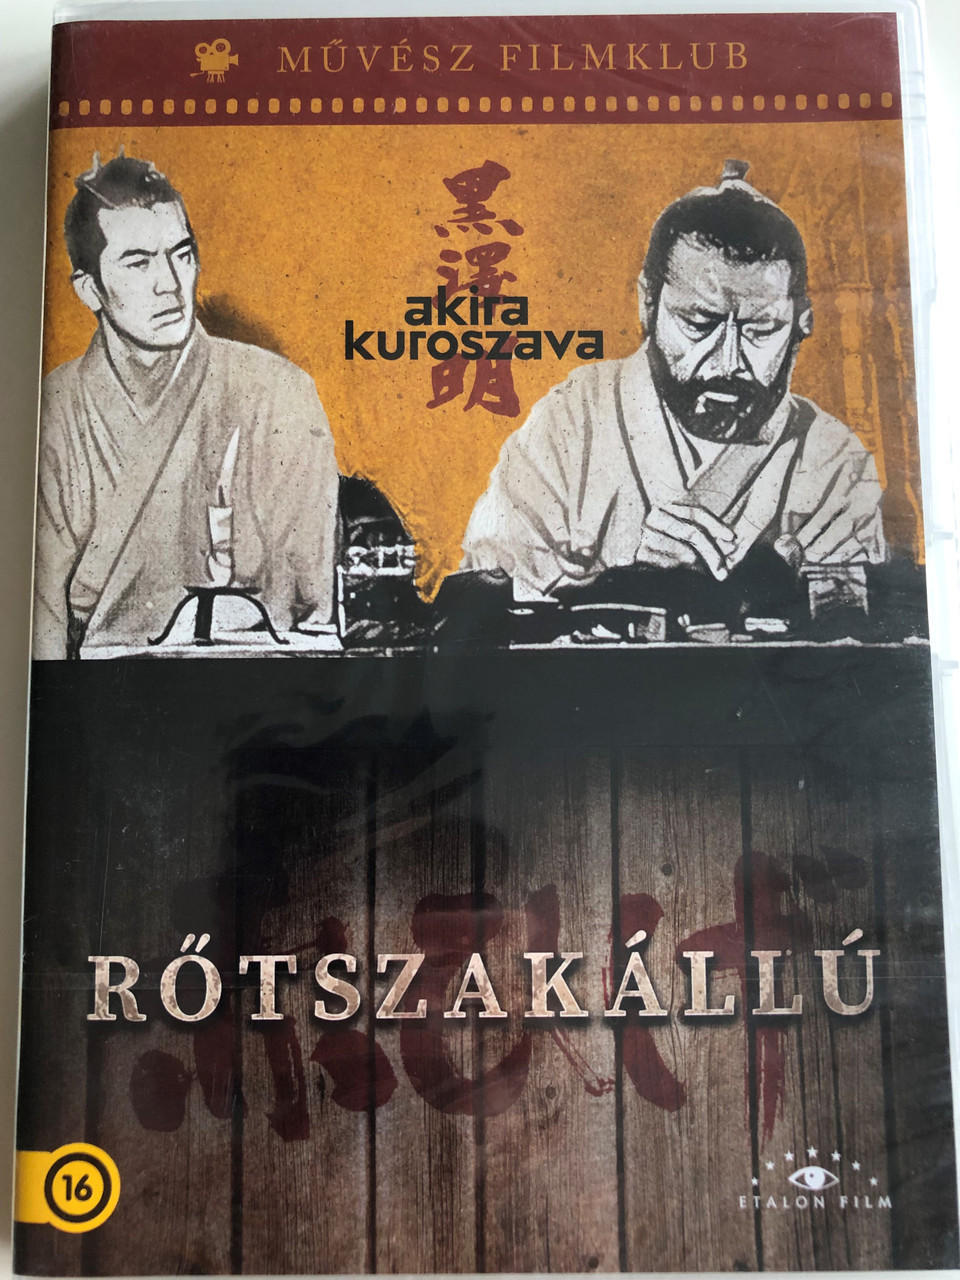 køkken At søge tilflugt civile Akahige (赤ひげ) DVD 1965 Rőtszakállú (Red Beard) / Directed by Akira Kurosawa  / Starring: Toshiro Mifune, Yūzō Kayama / Művész Filmklub -  bibleinmylanguage